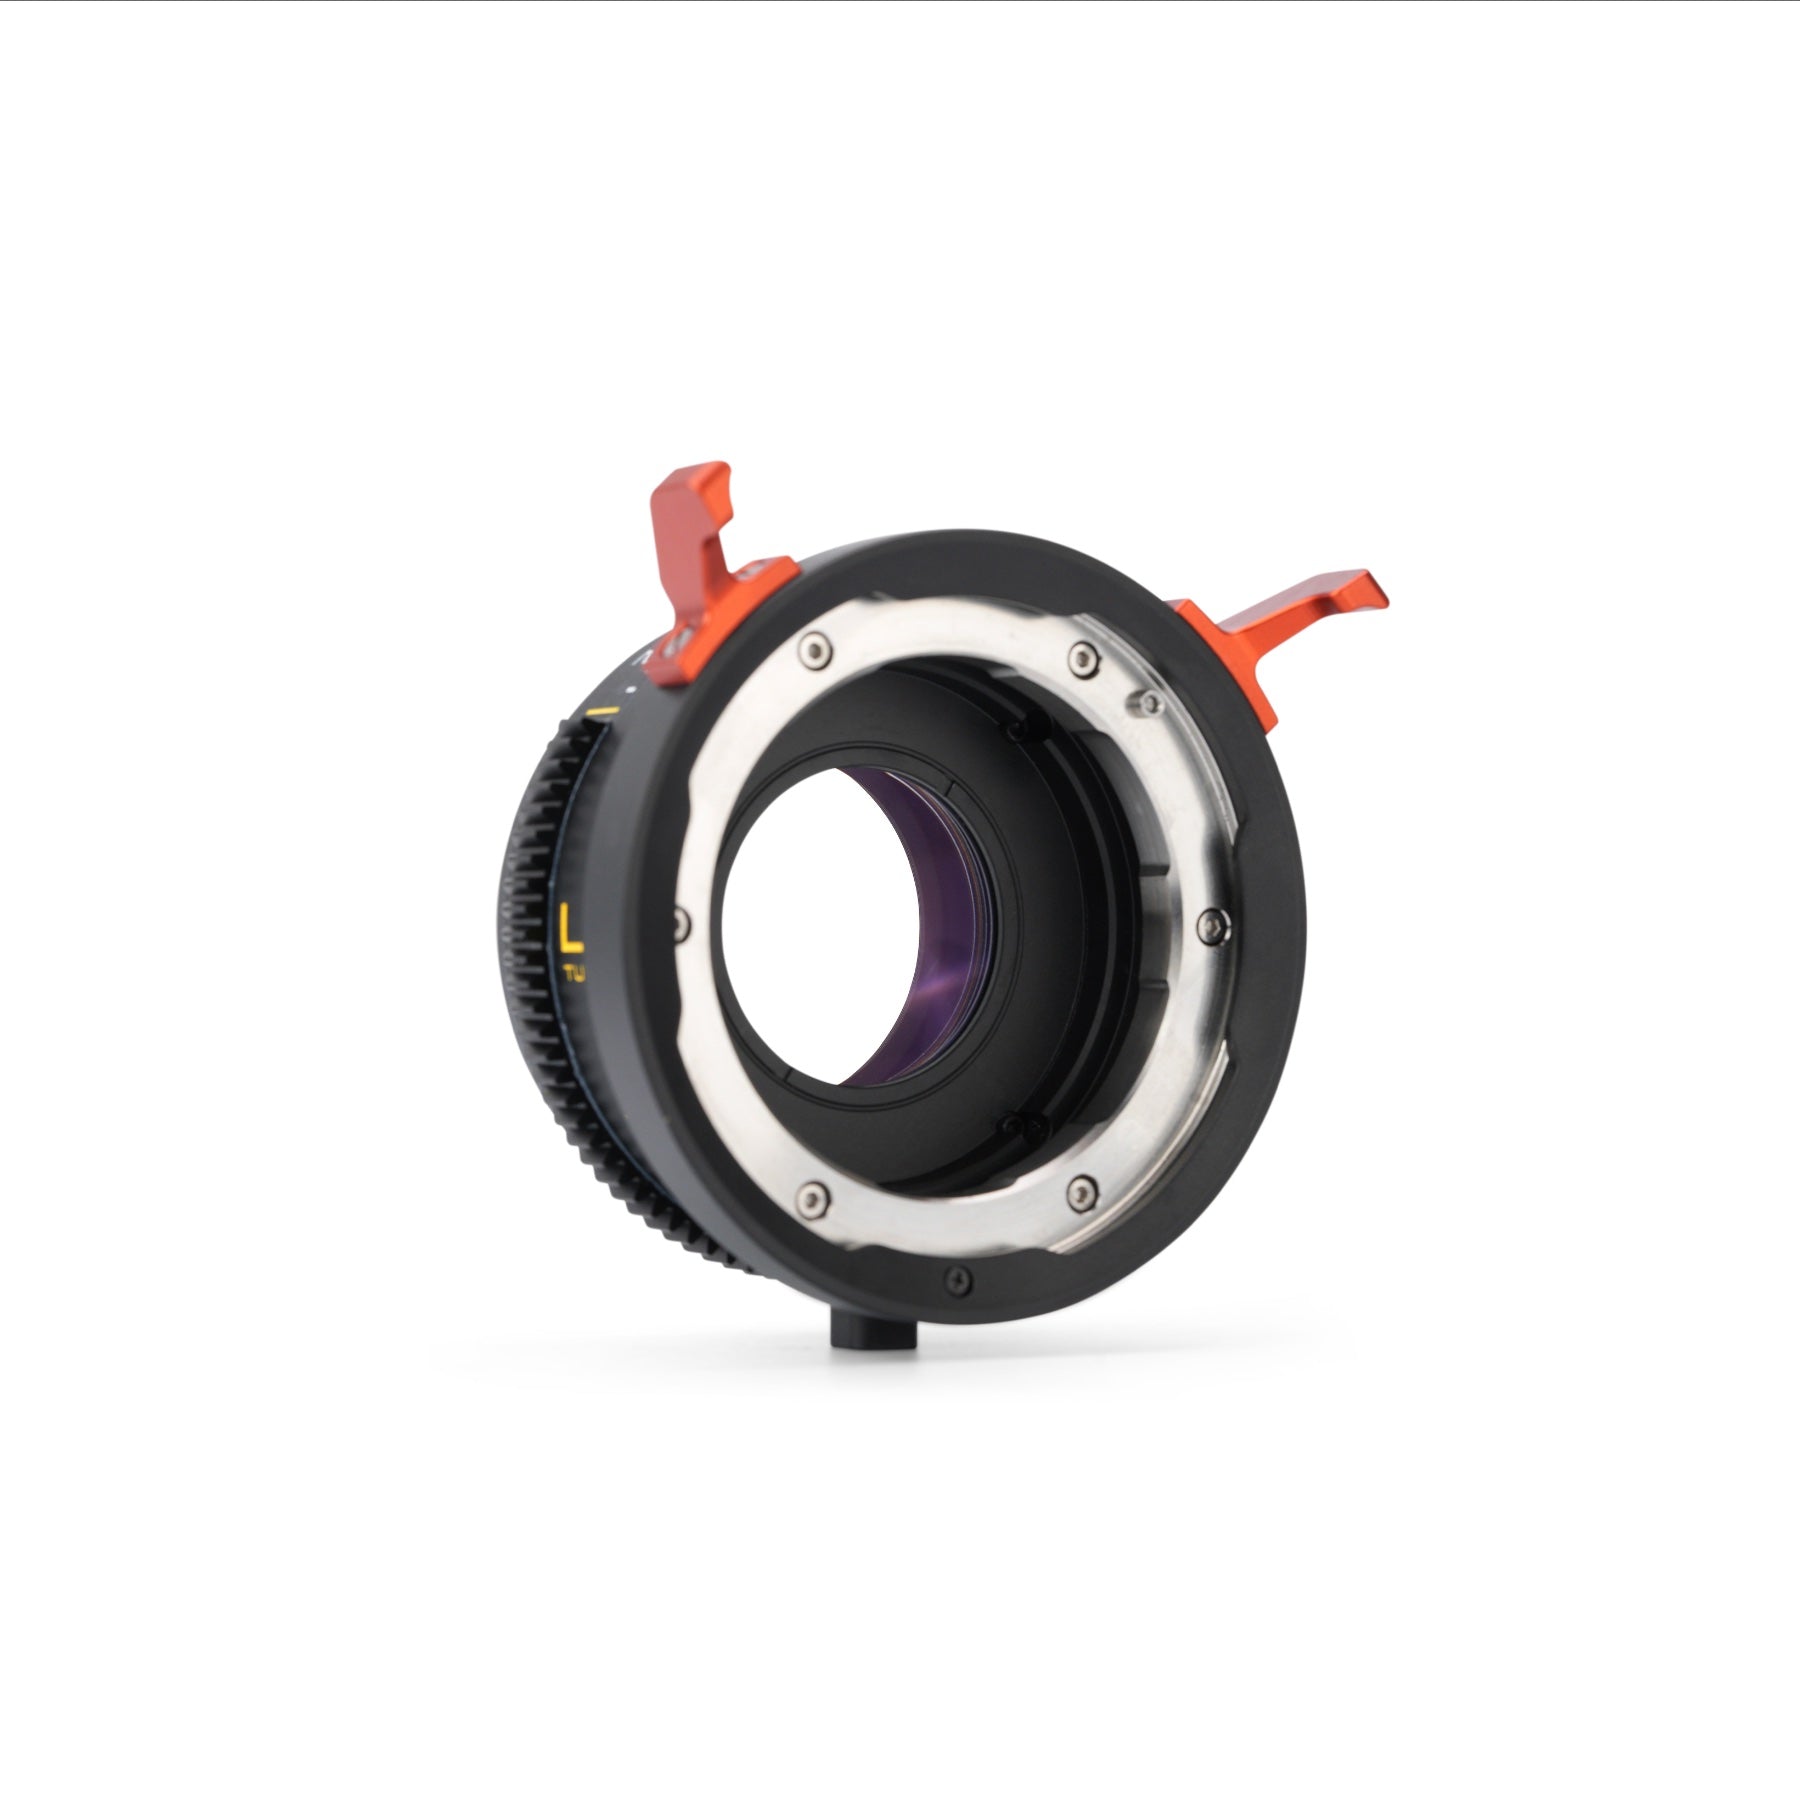 L3 Tuner - Retroscope Variable Look Lens